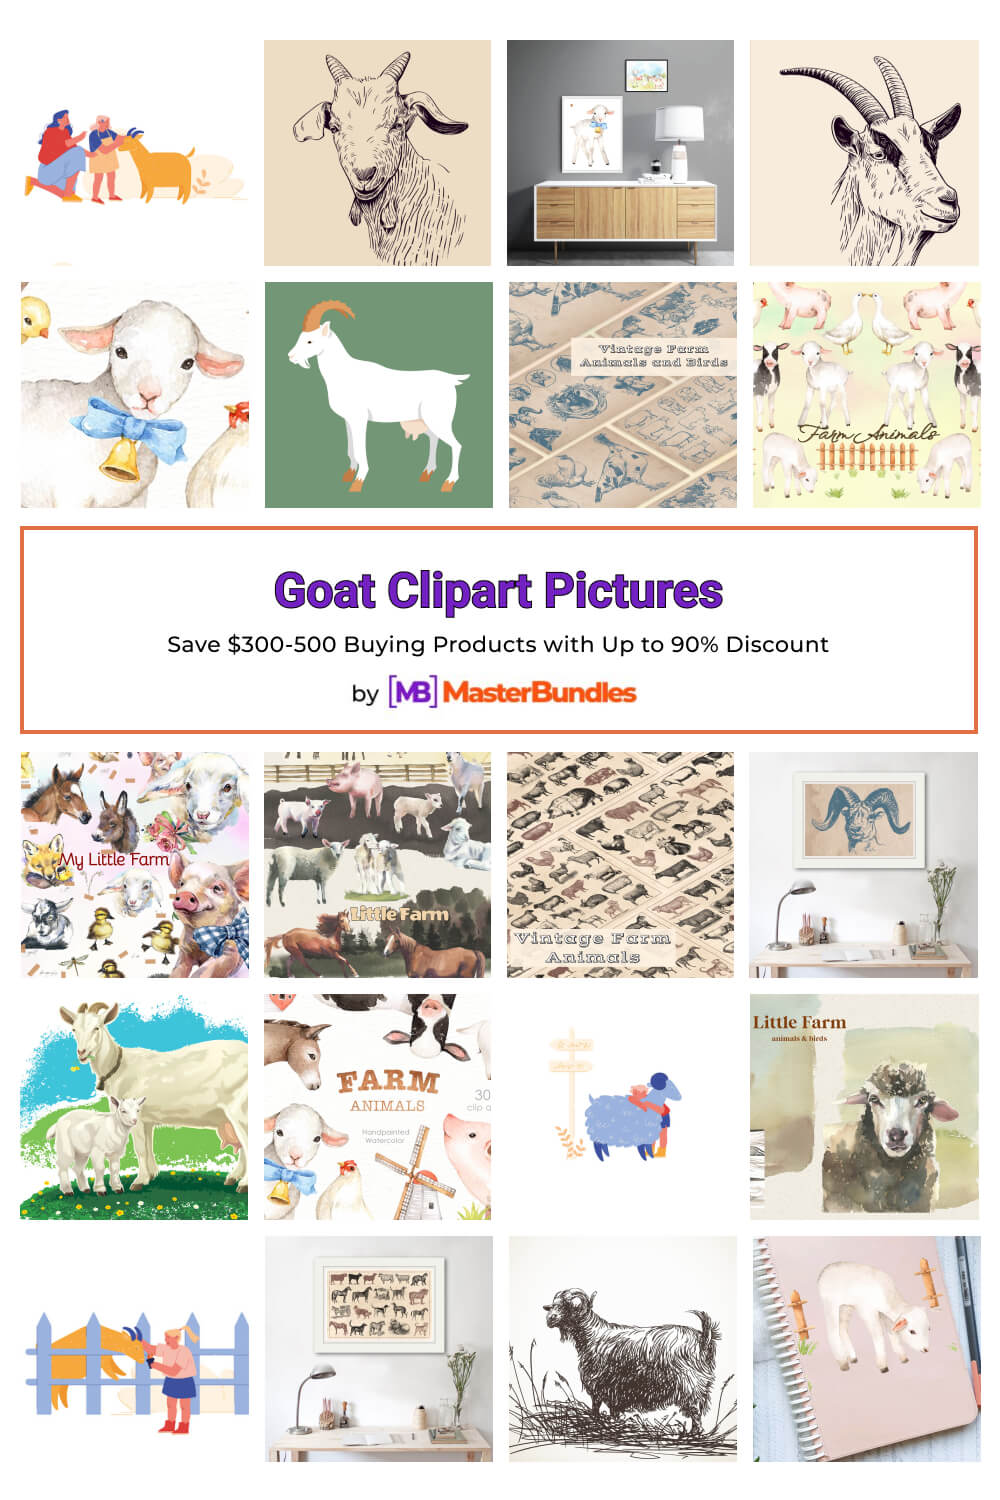 goat clipart pictures pinterest image.